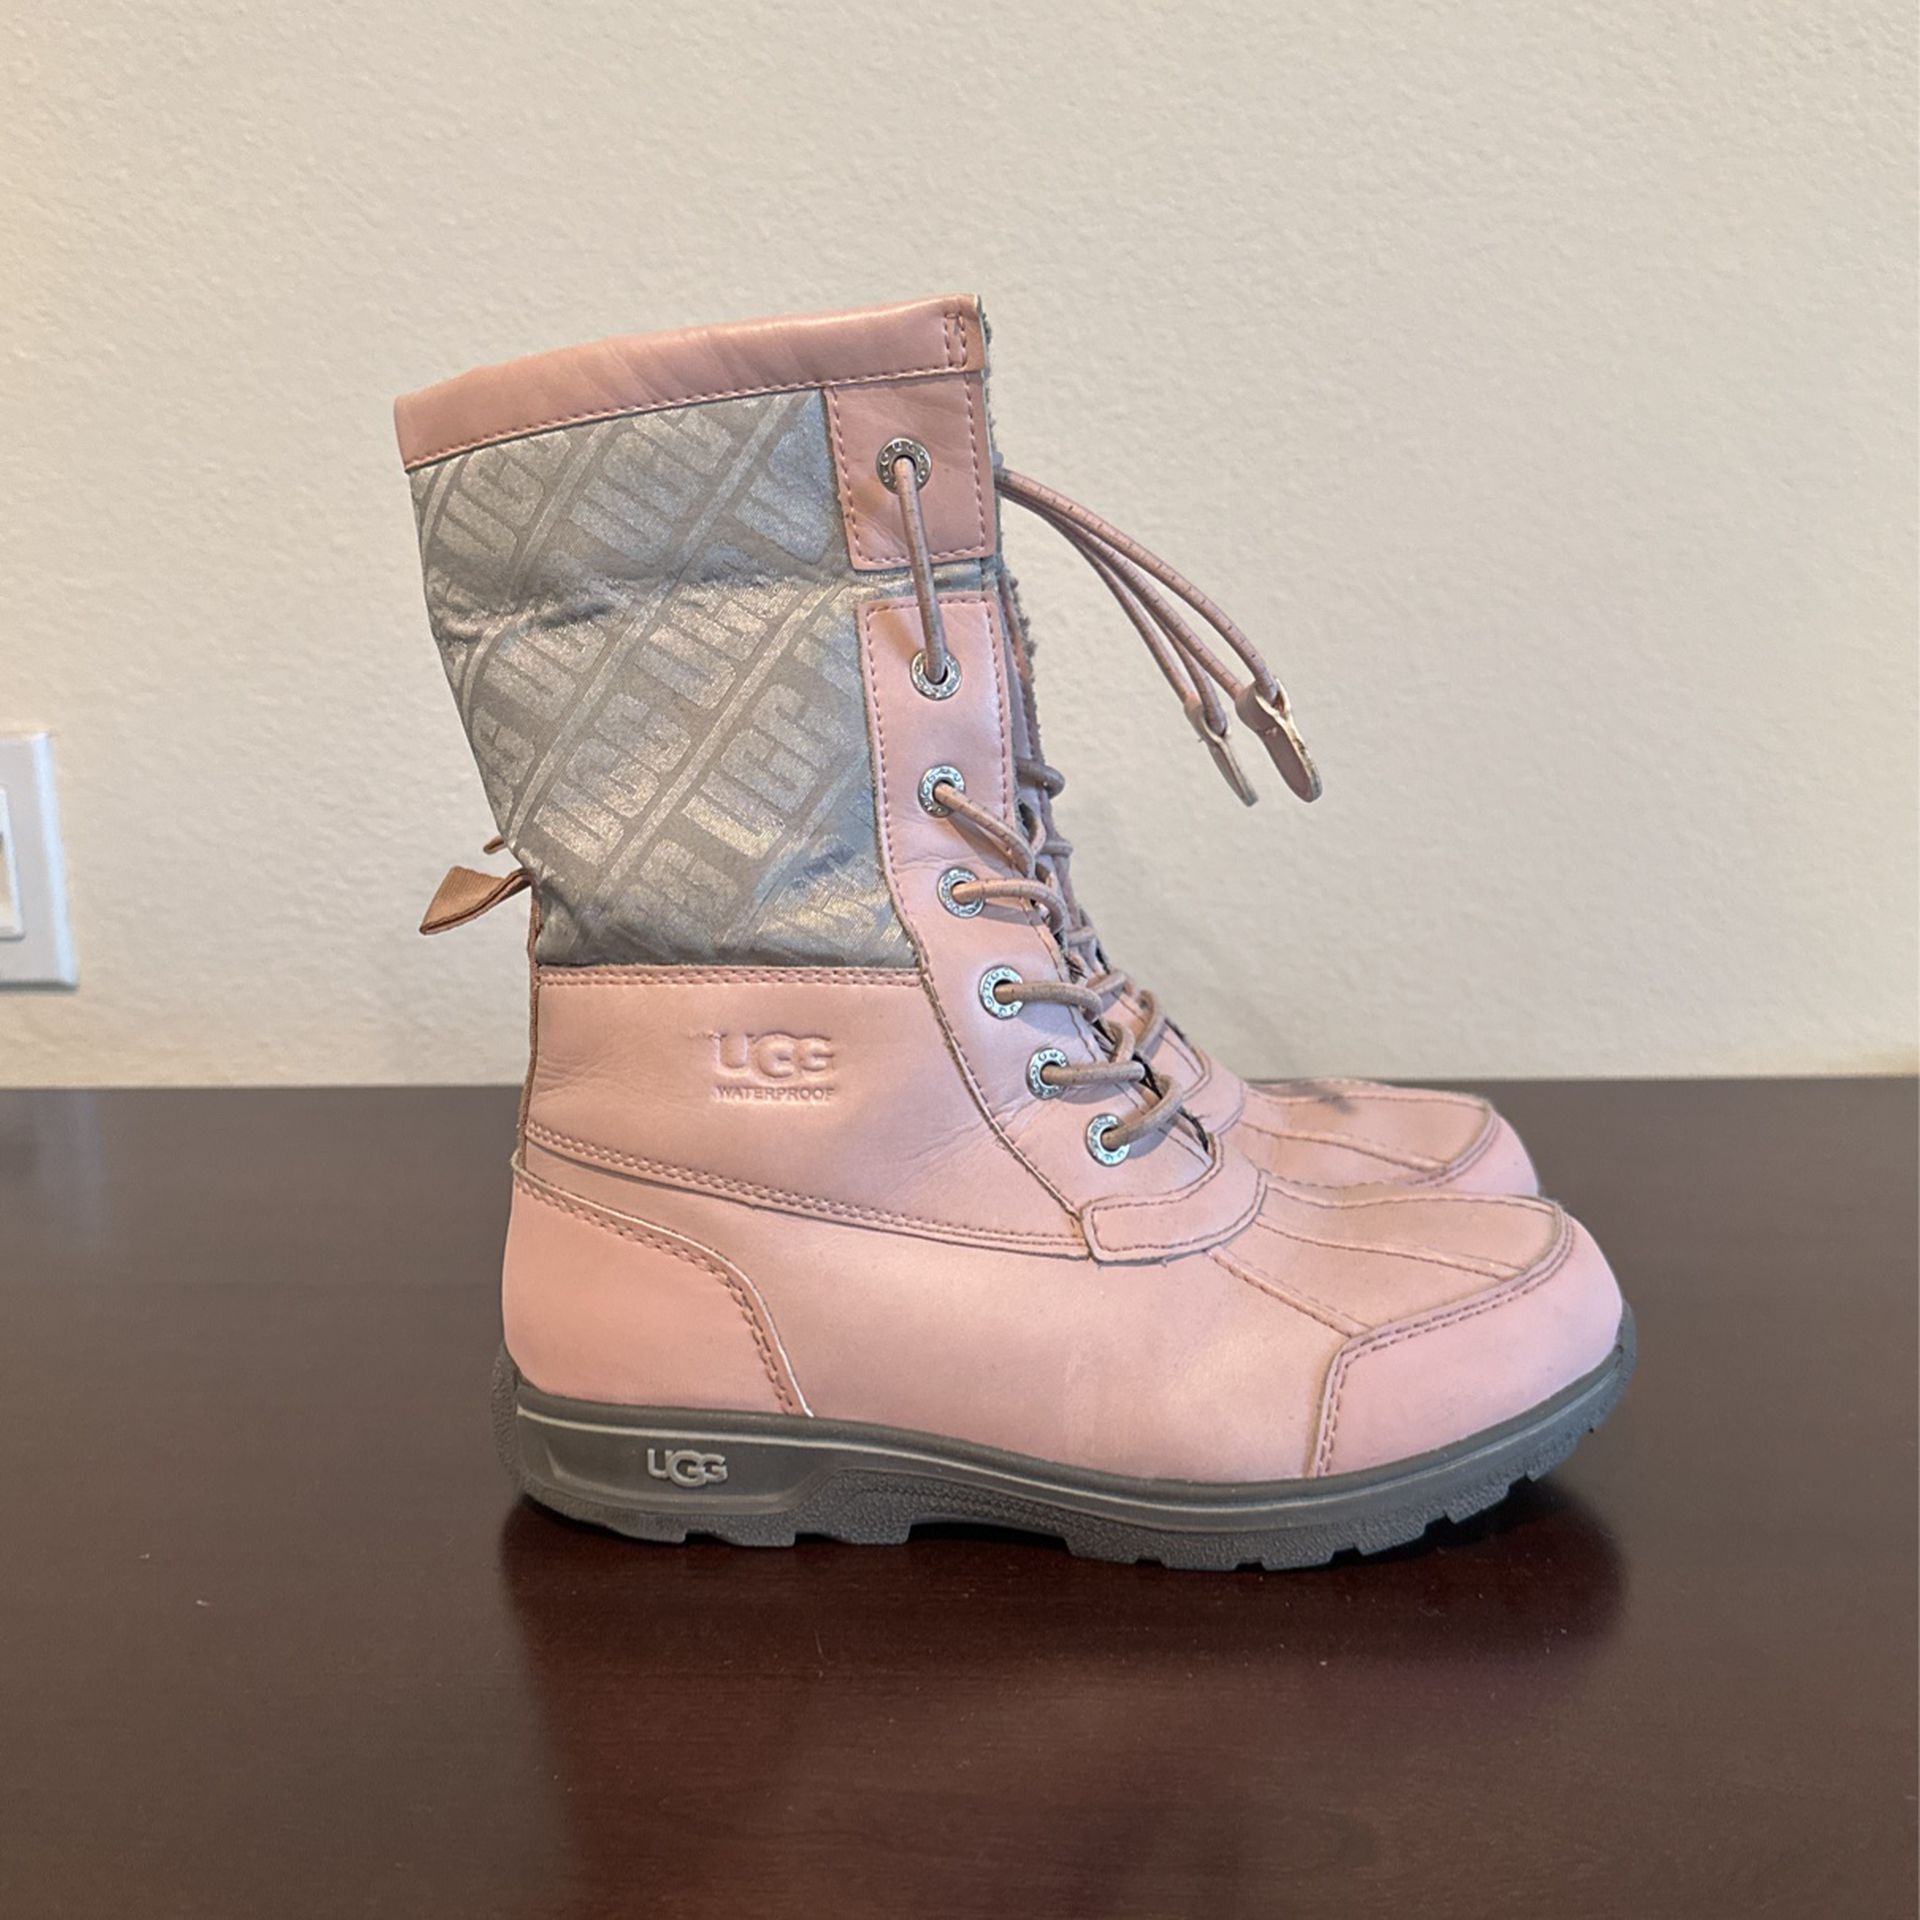 Girls UGG Waterproof  Boots/rain/snow Boots Pink Size 4 